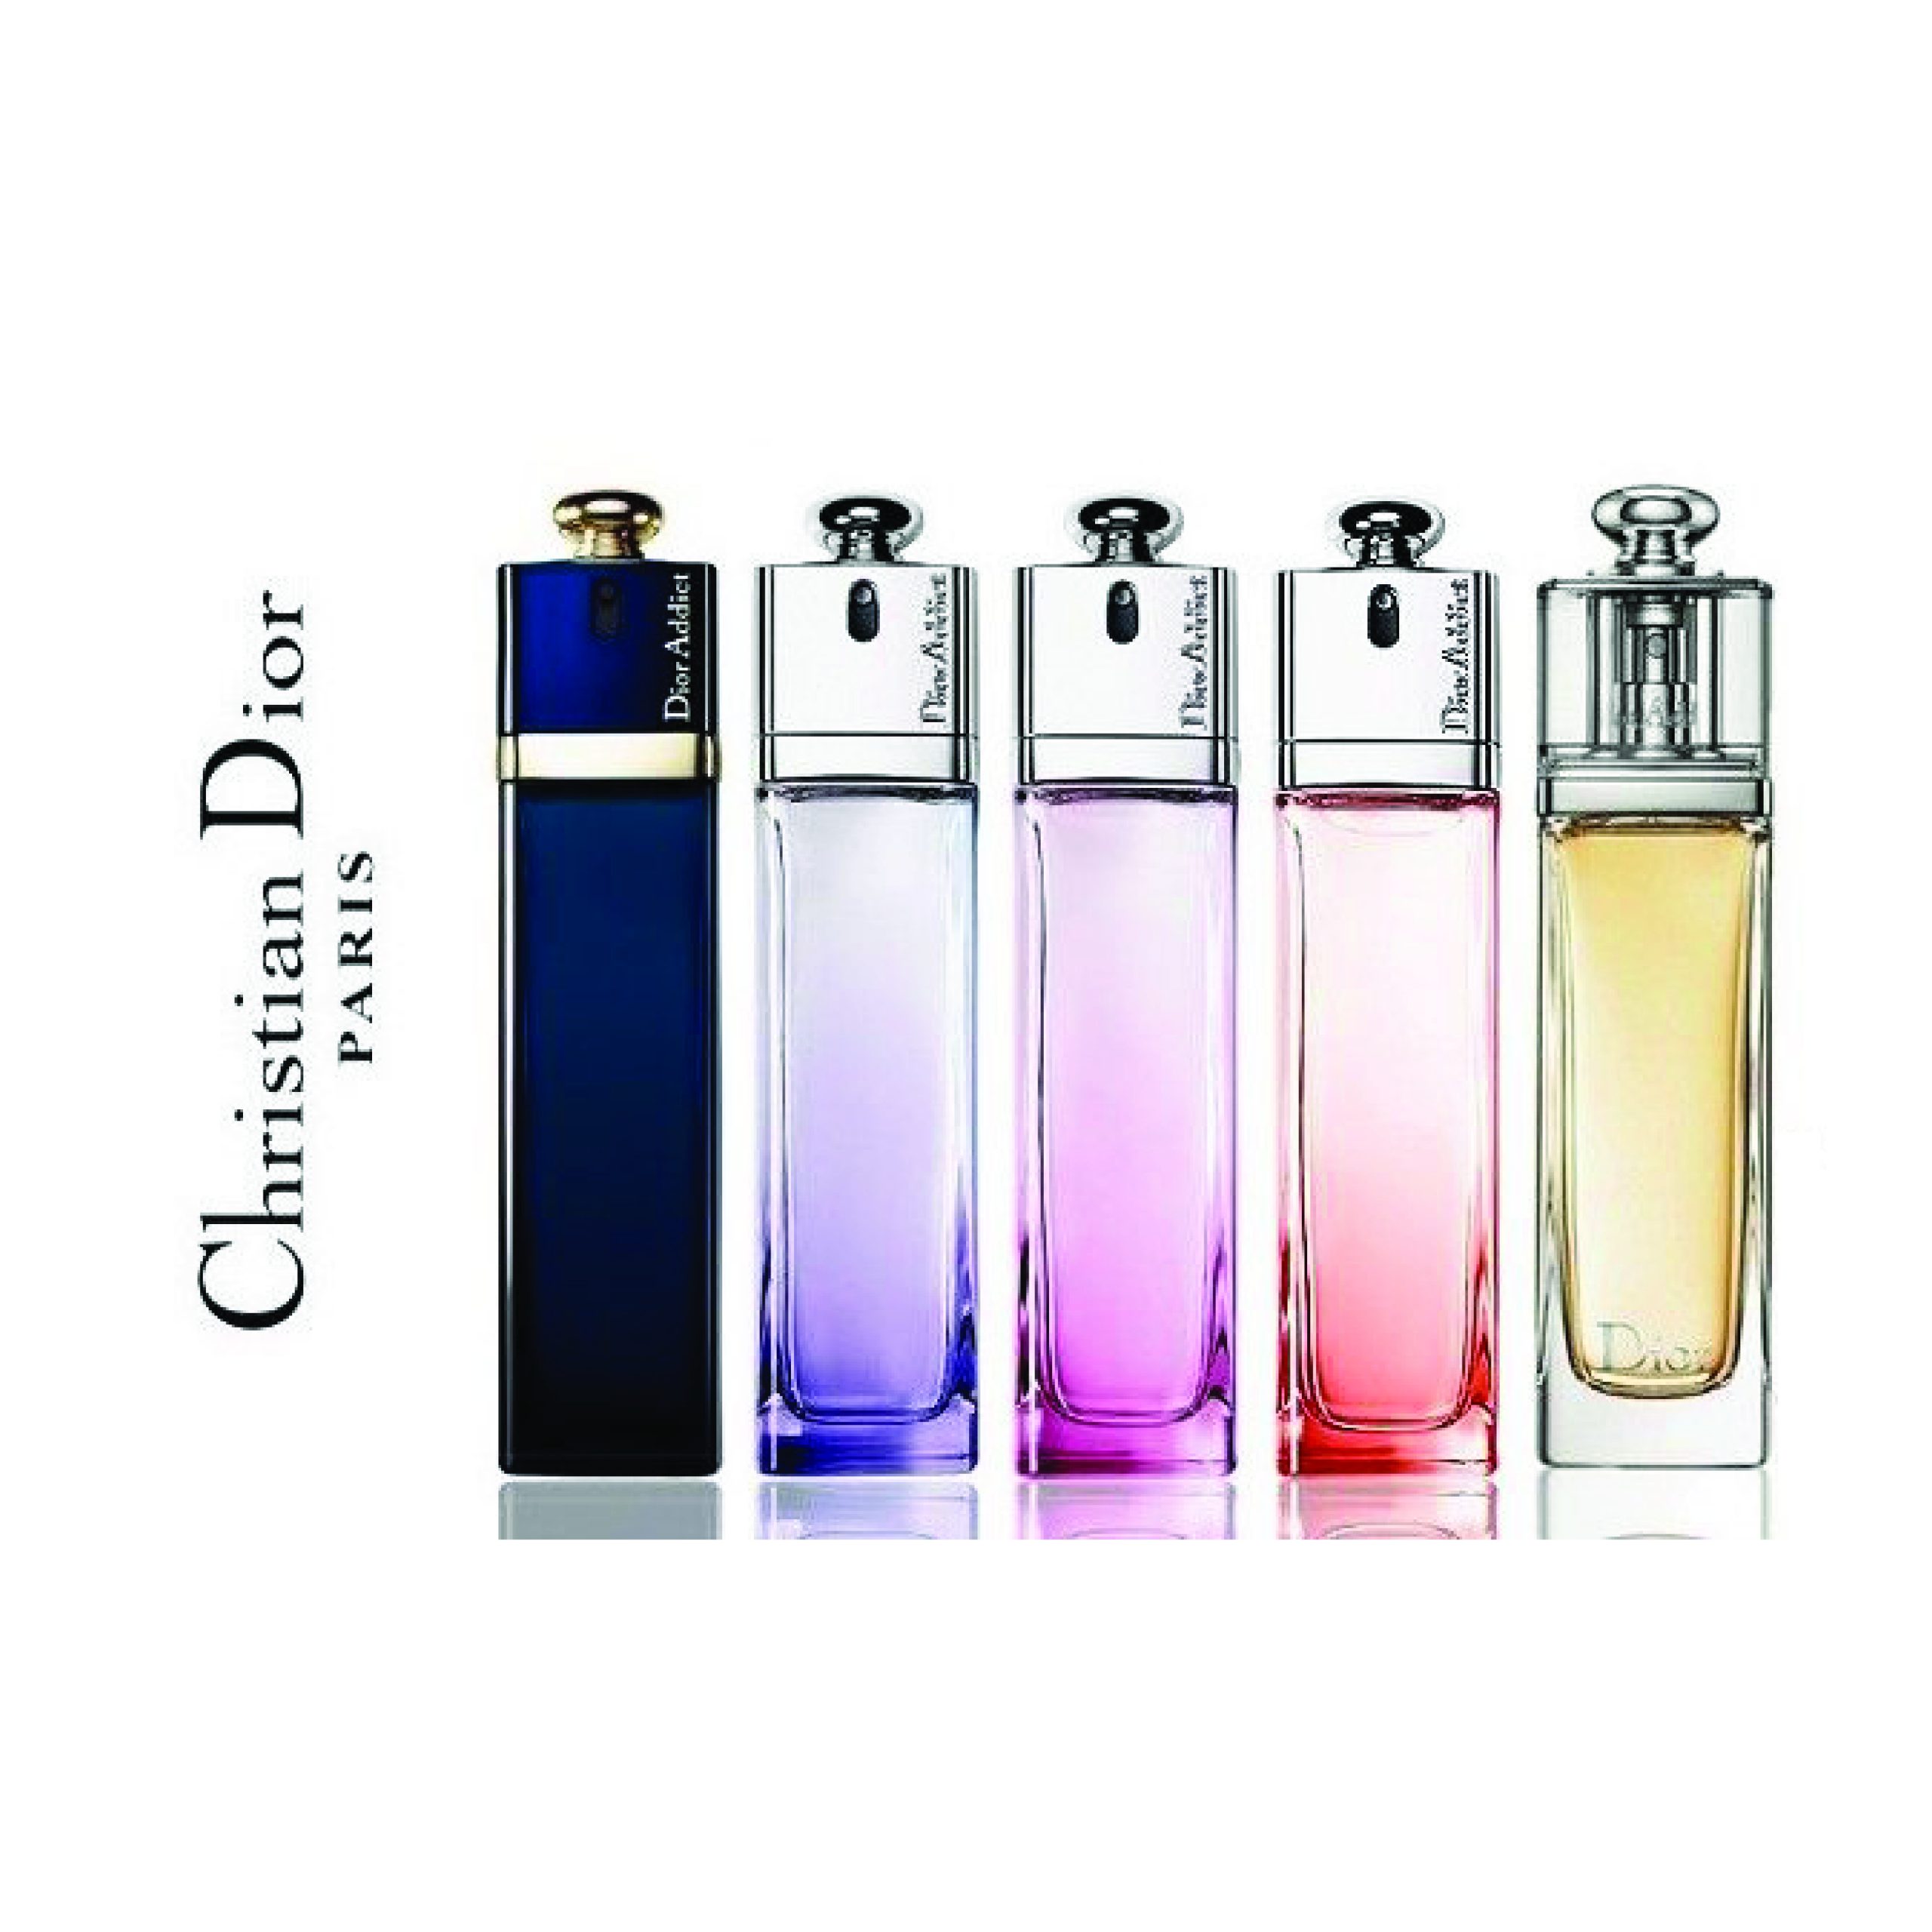 Gift Set of perfume Dior 5 fragrances in minivials of 5 ml  AliExpress